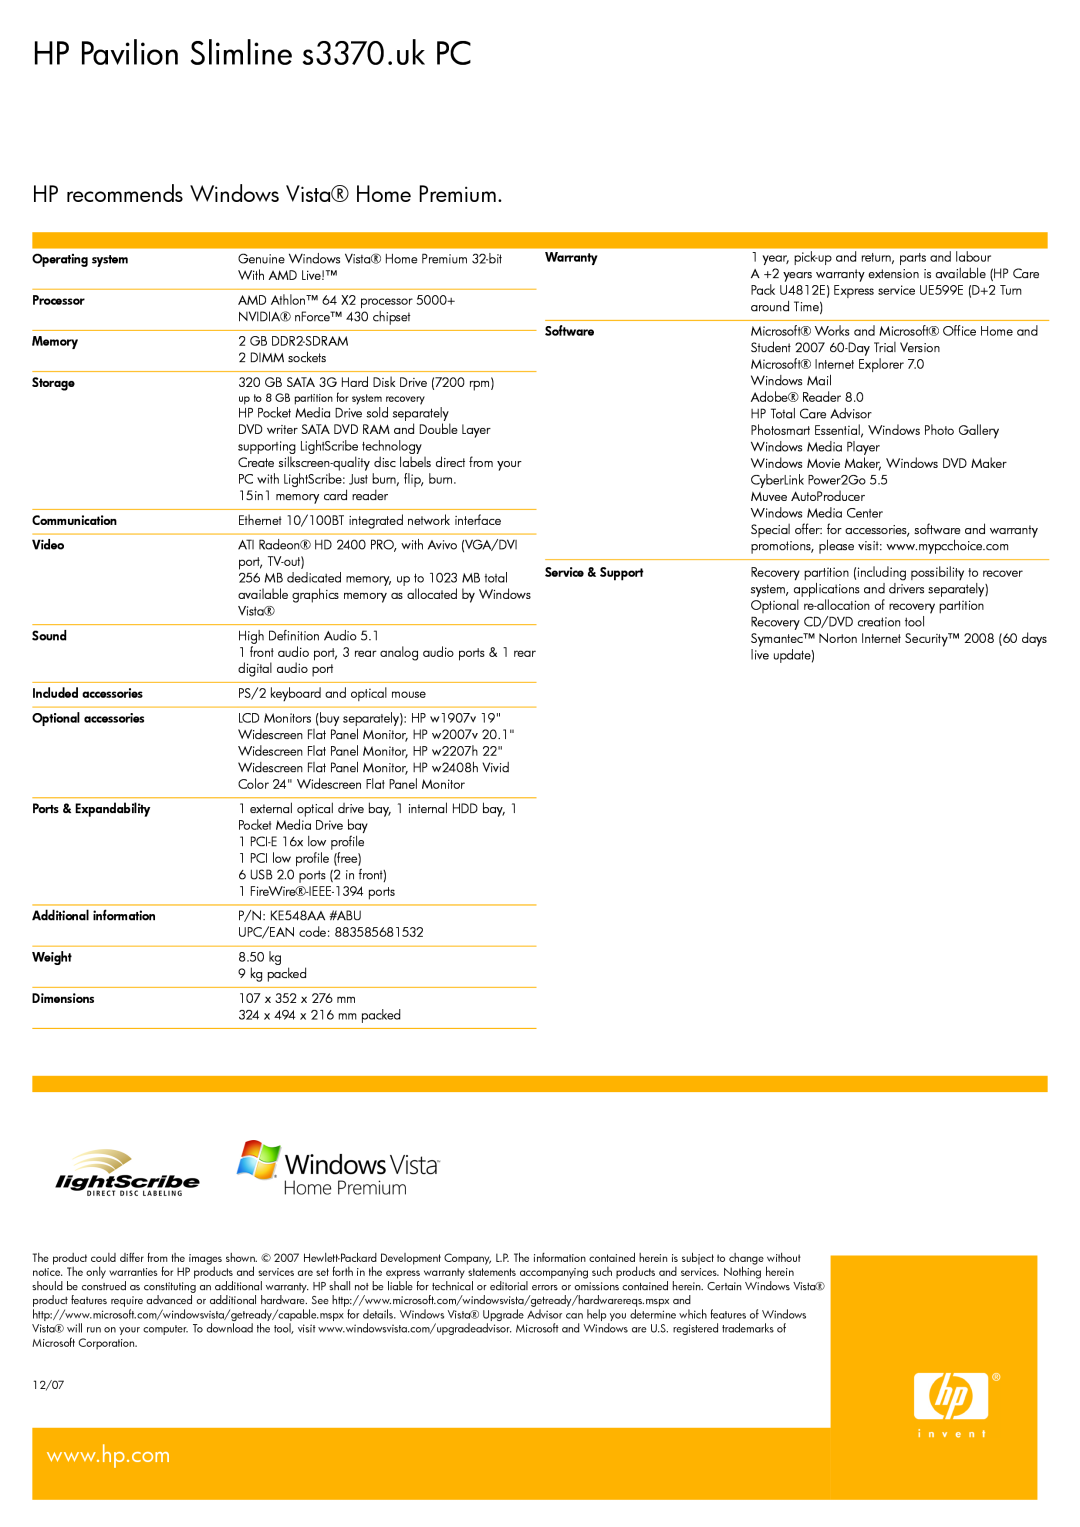 BT manual HP Pavilion Slimline s3370.uk PC, HP recommends Windows Vista Home Premium, Operating system 